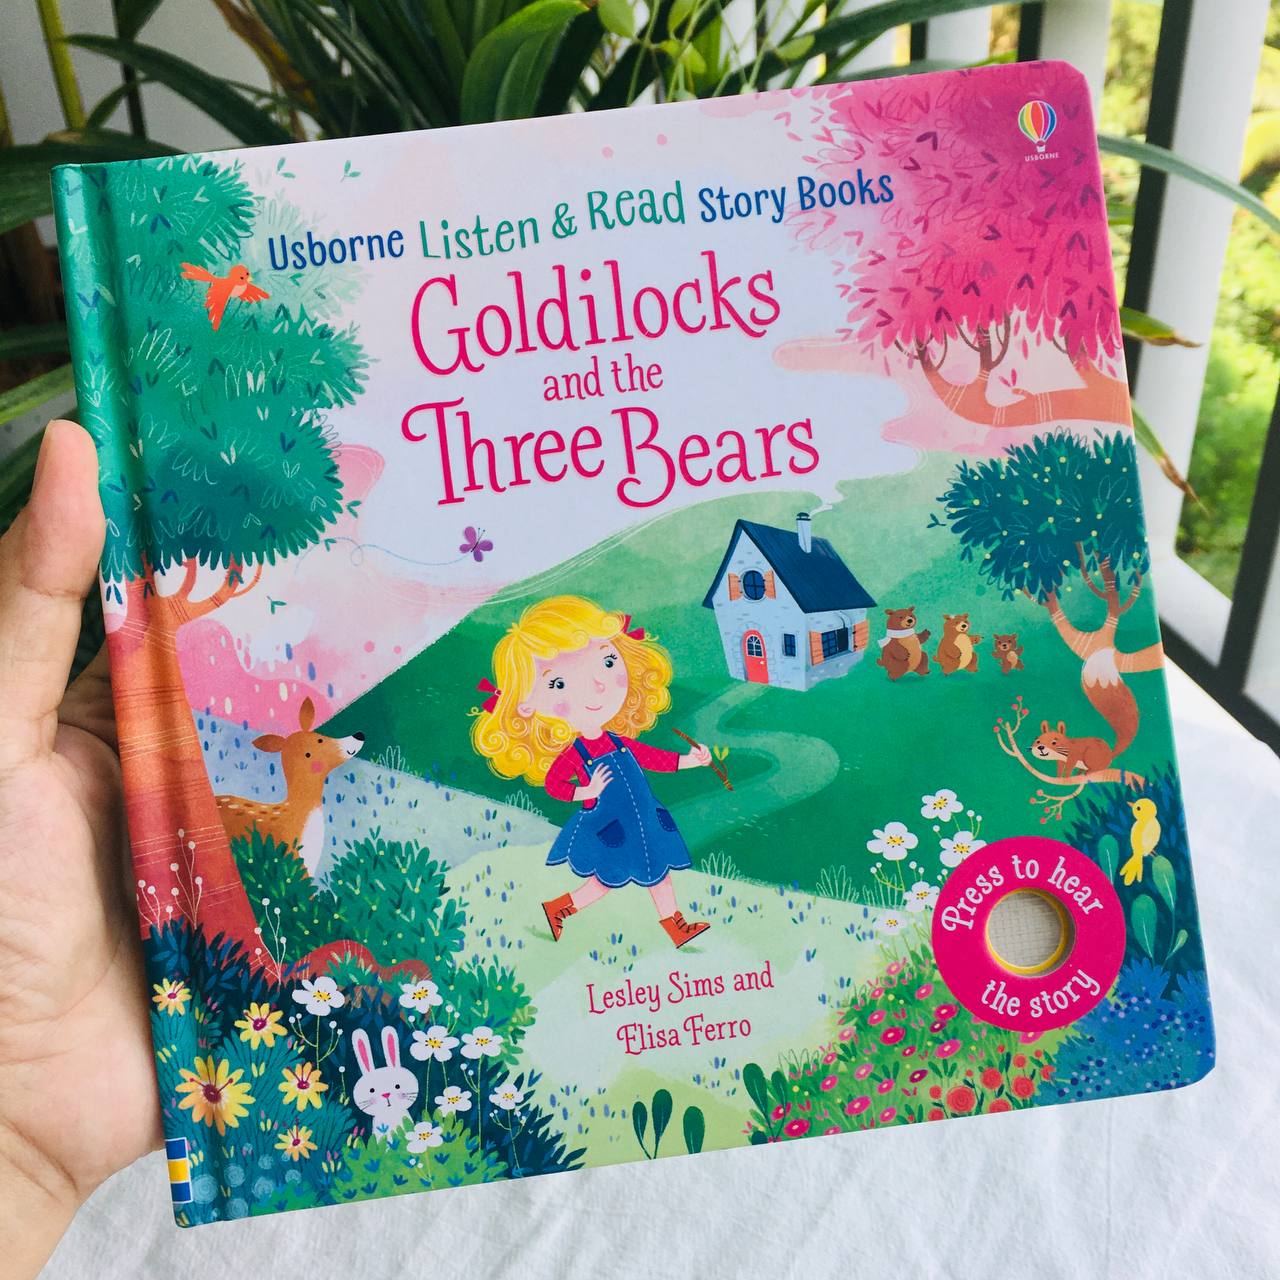 Listen and Read Story Books : Goldilocks and the Three Bears